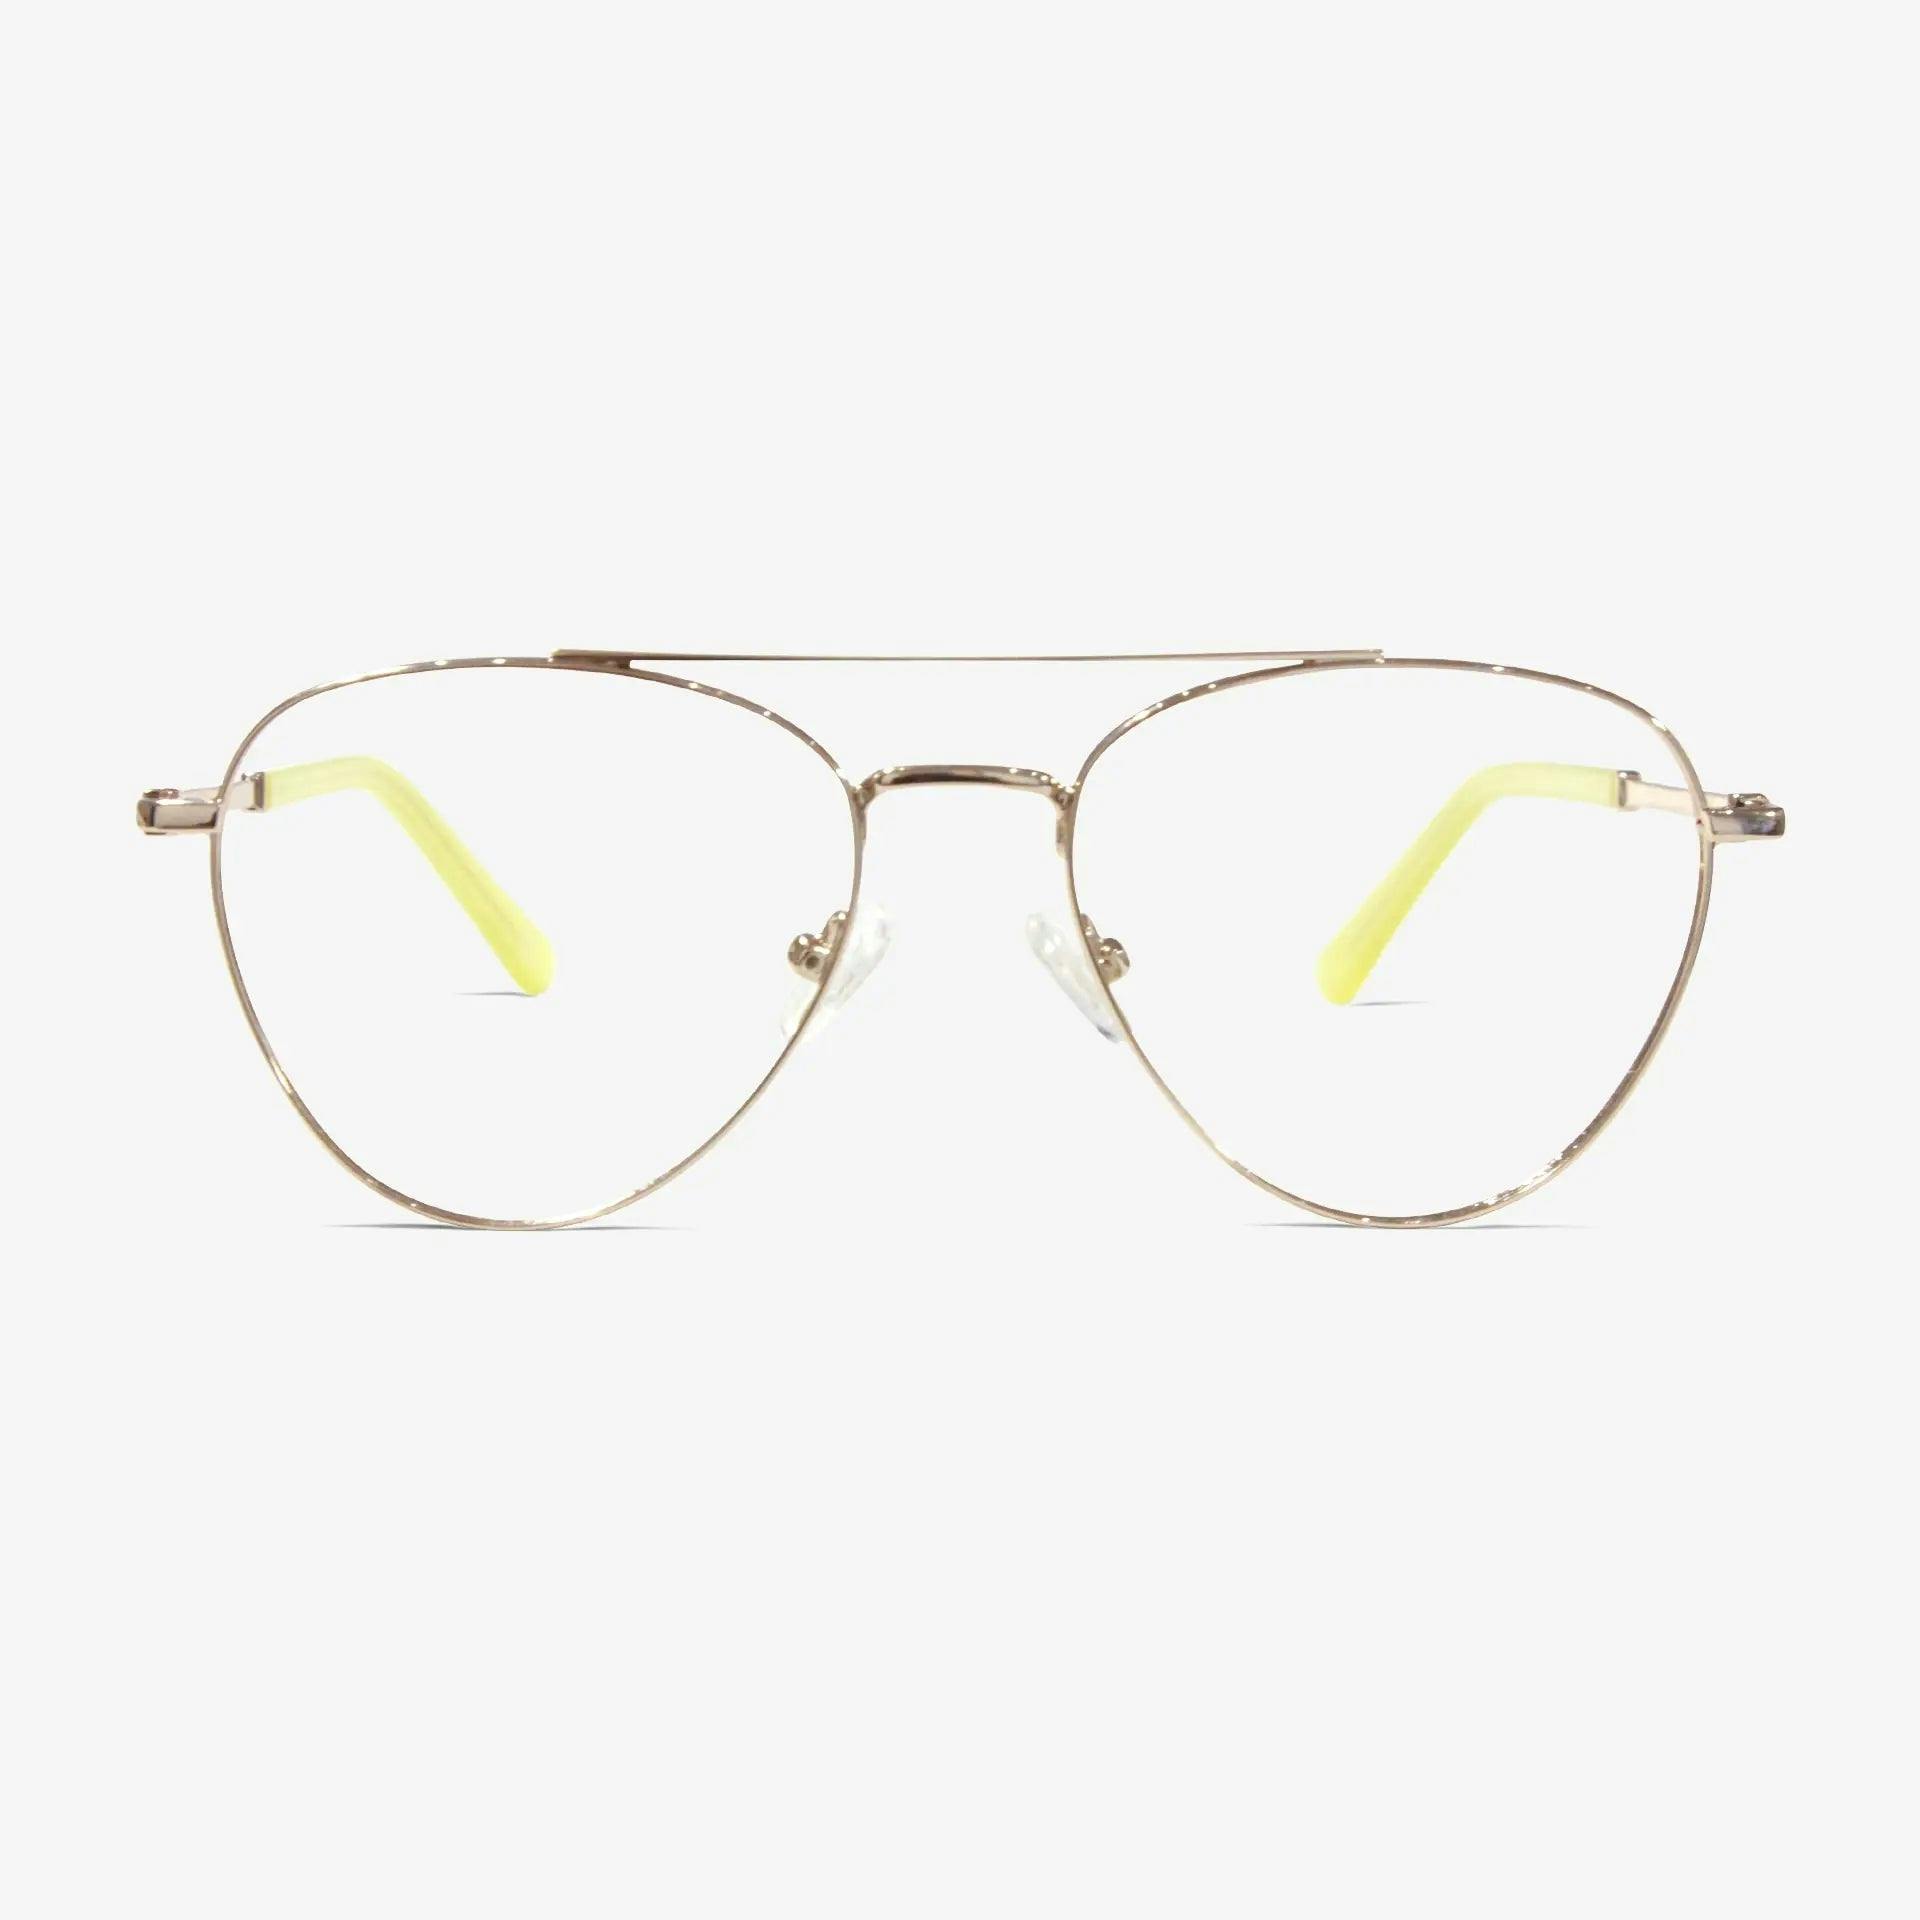 Huxley glasses | Prop Silver 